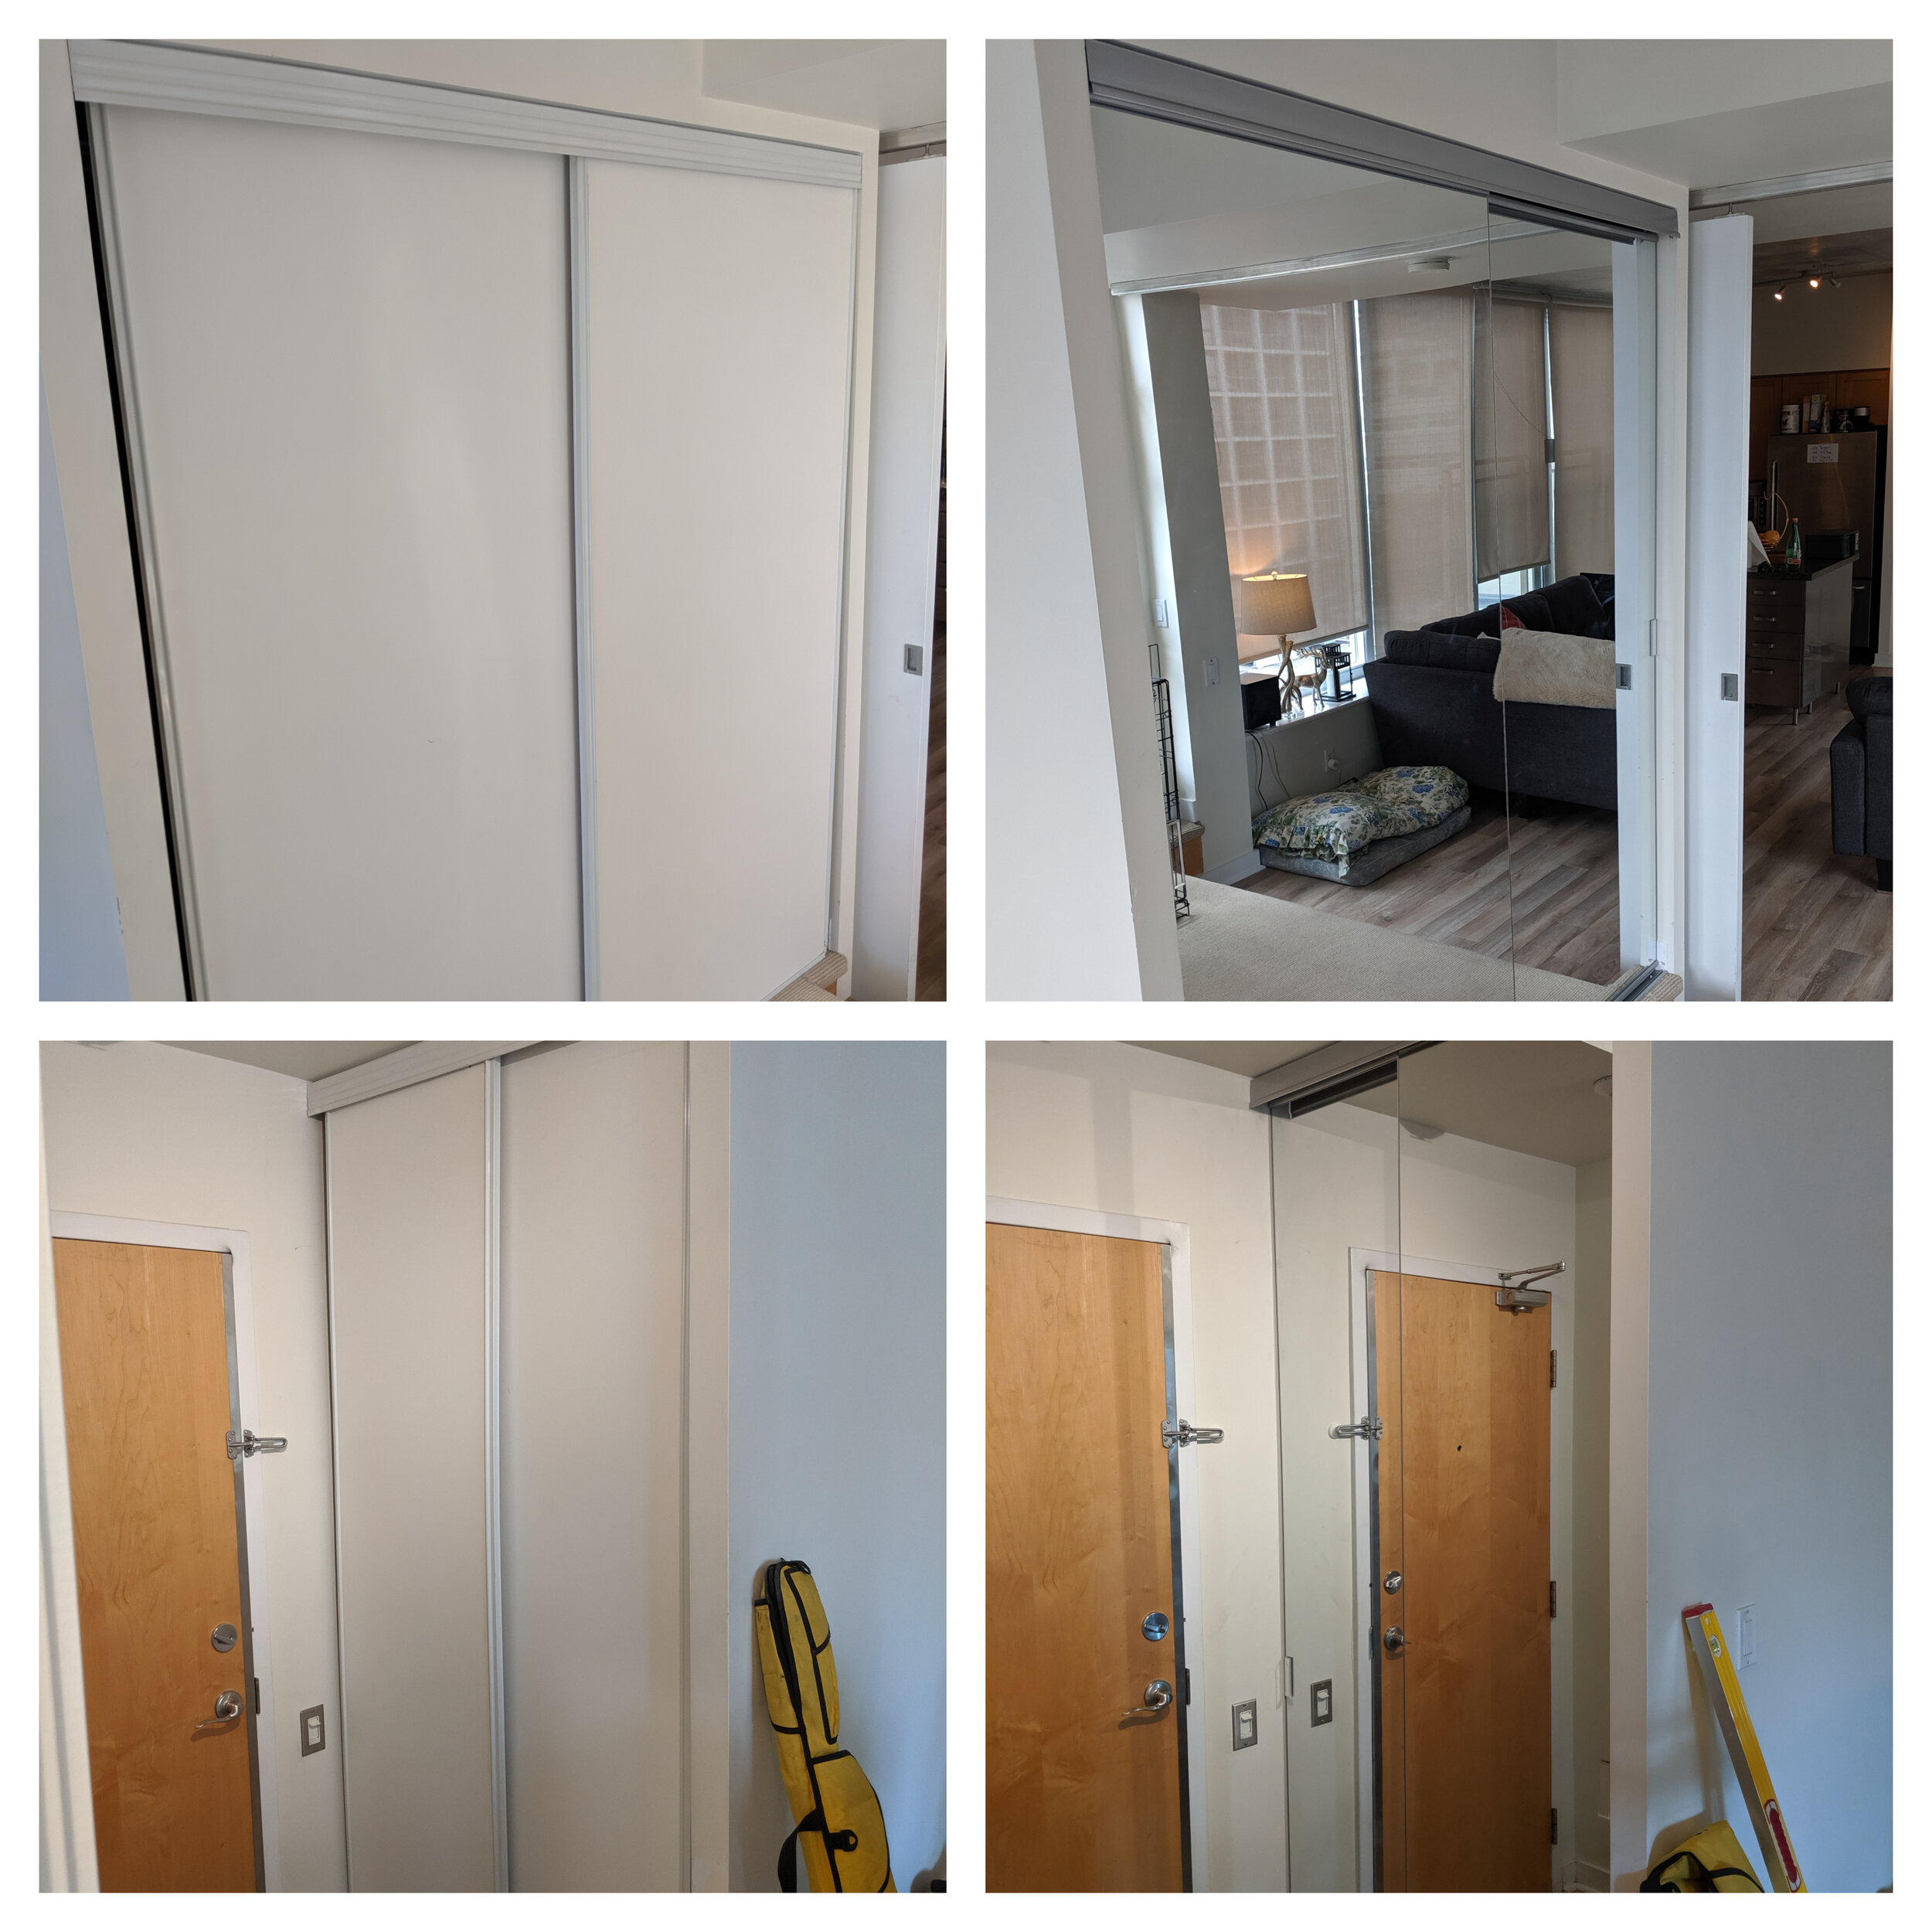 Sliding Closet Doors Installation And, How To Install Hanging Mirror Closet Doors